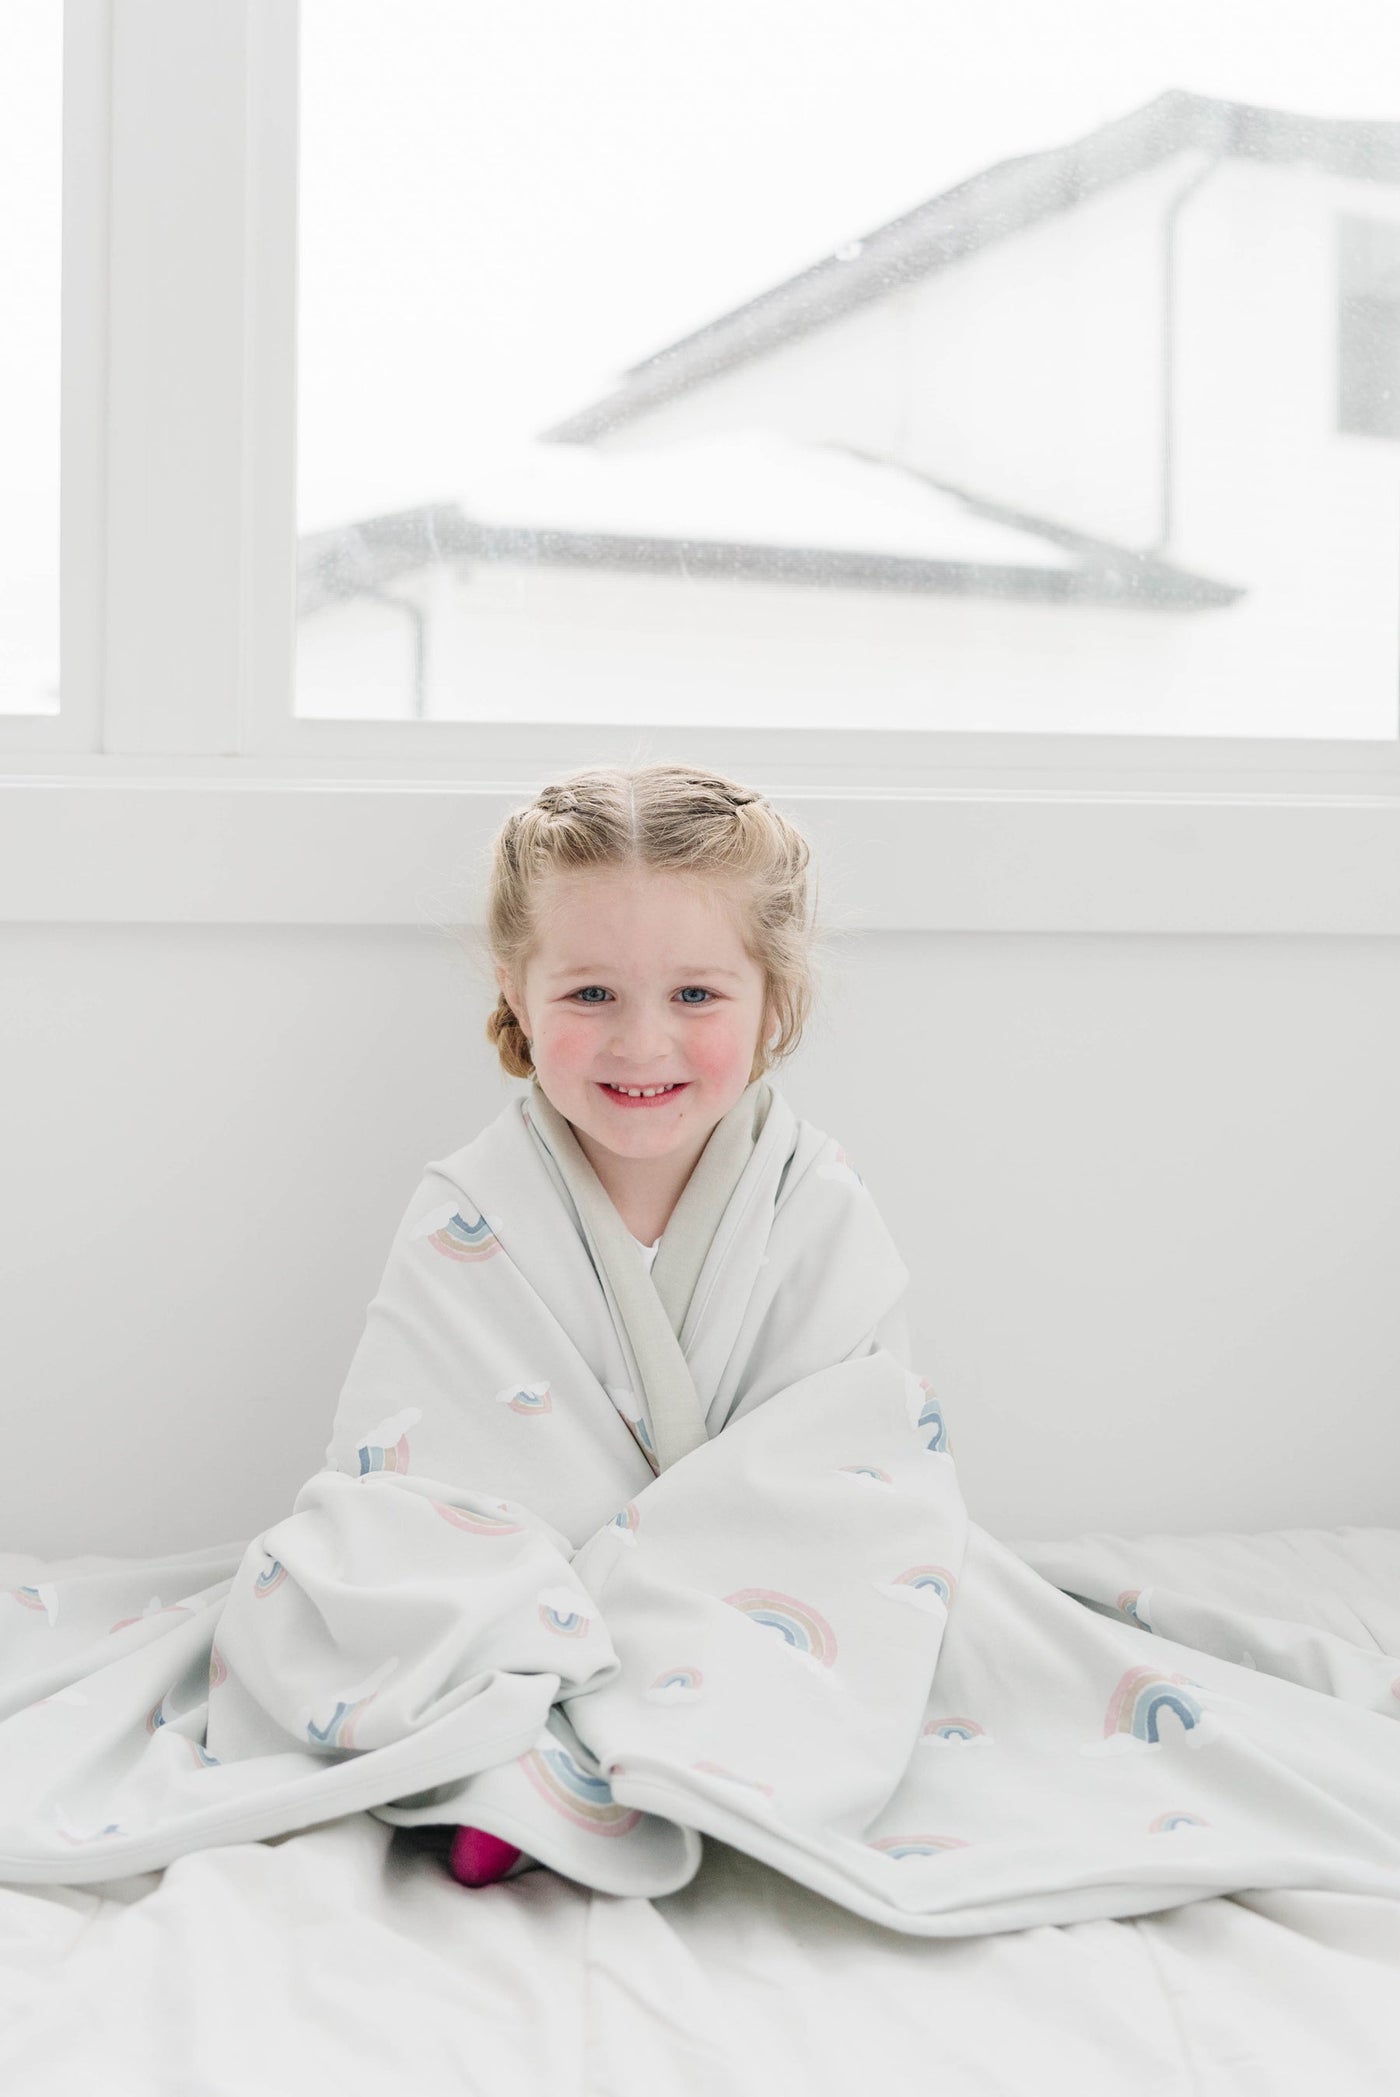 Toddler Blanket, 4 Season® Merino Wool Blanket, 52.5" x 40", Rainbow